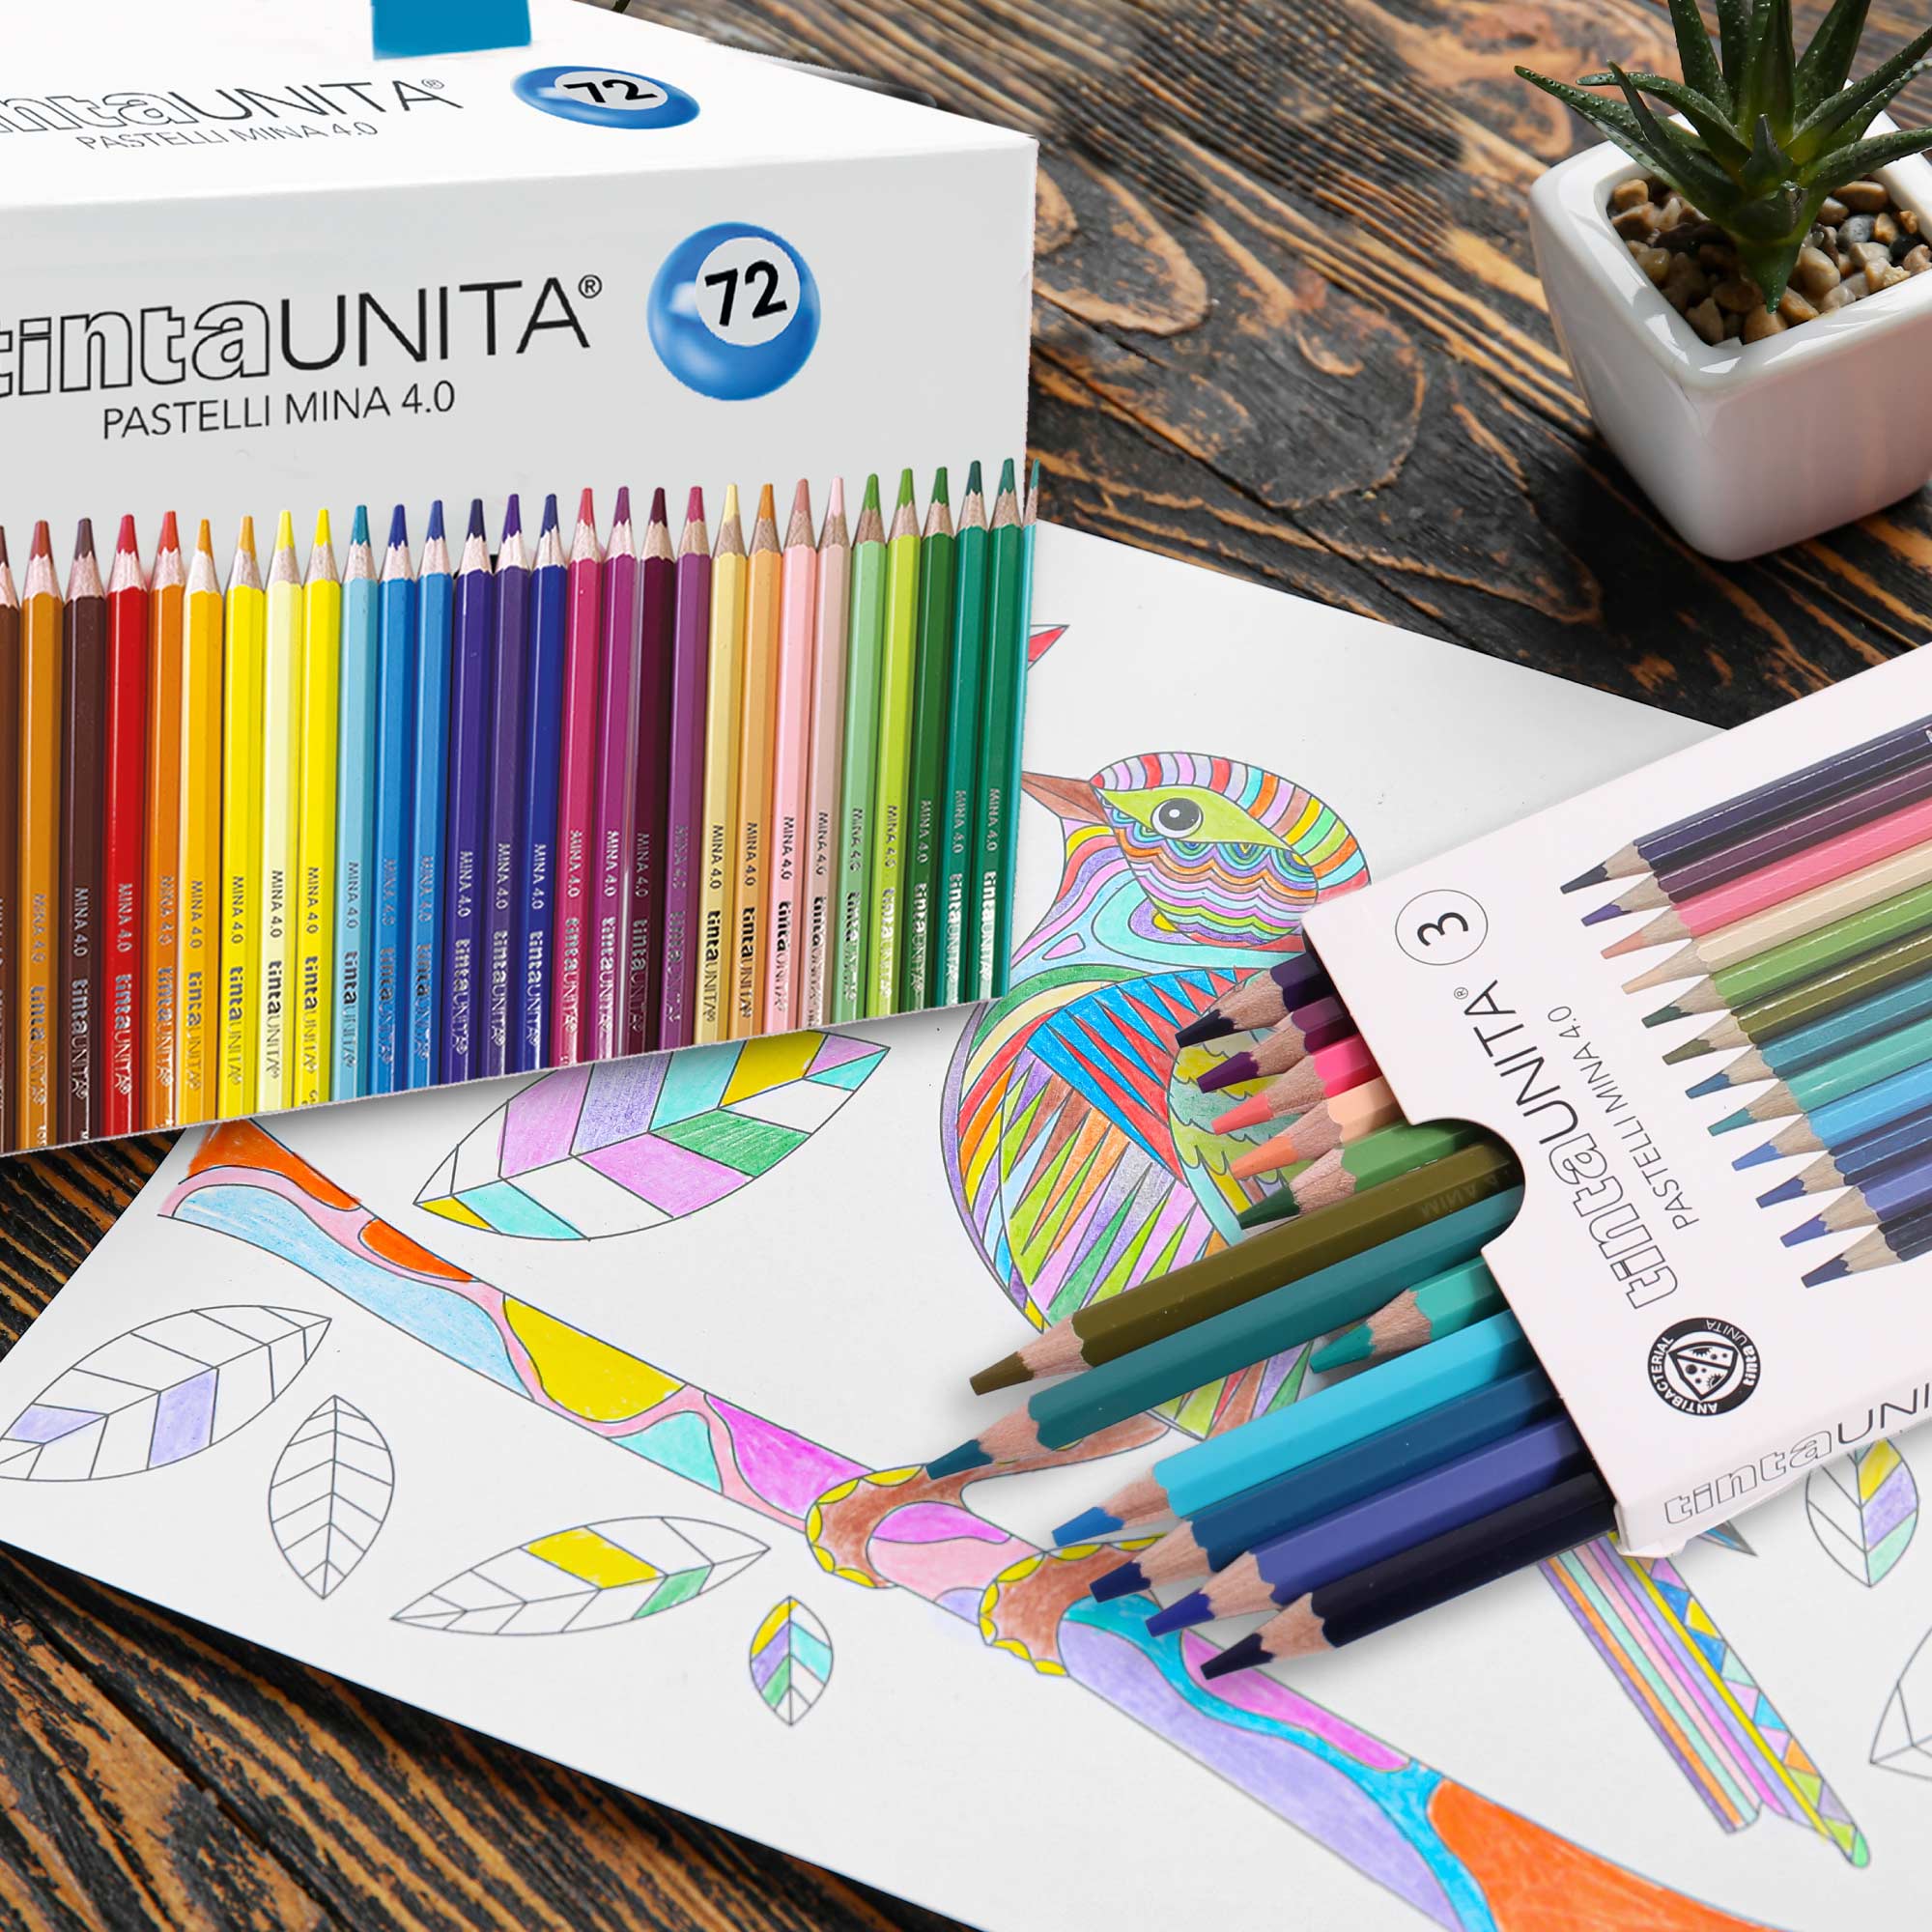 Pastelli Tinta Unita 4.0 Mina 4 mm in Magnetic Box da 108 Colori